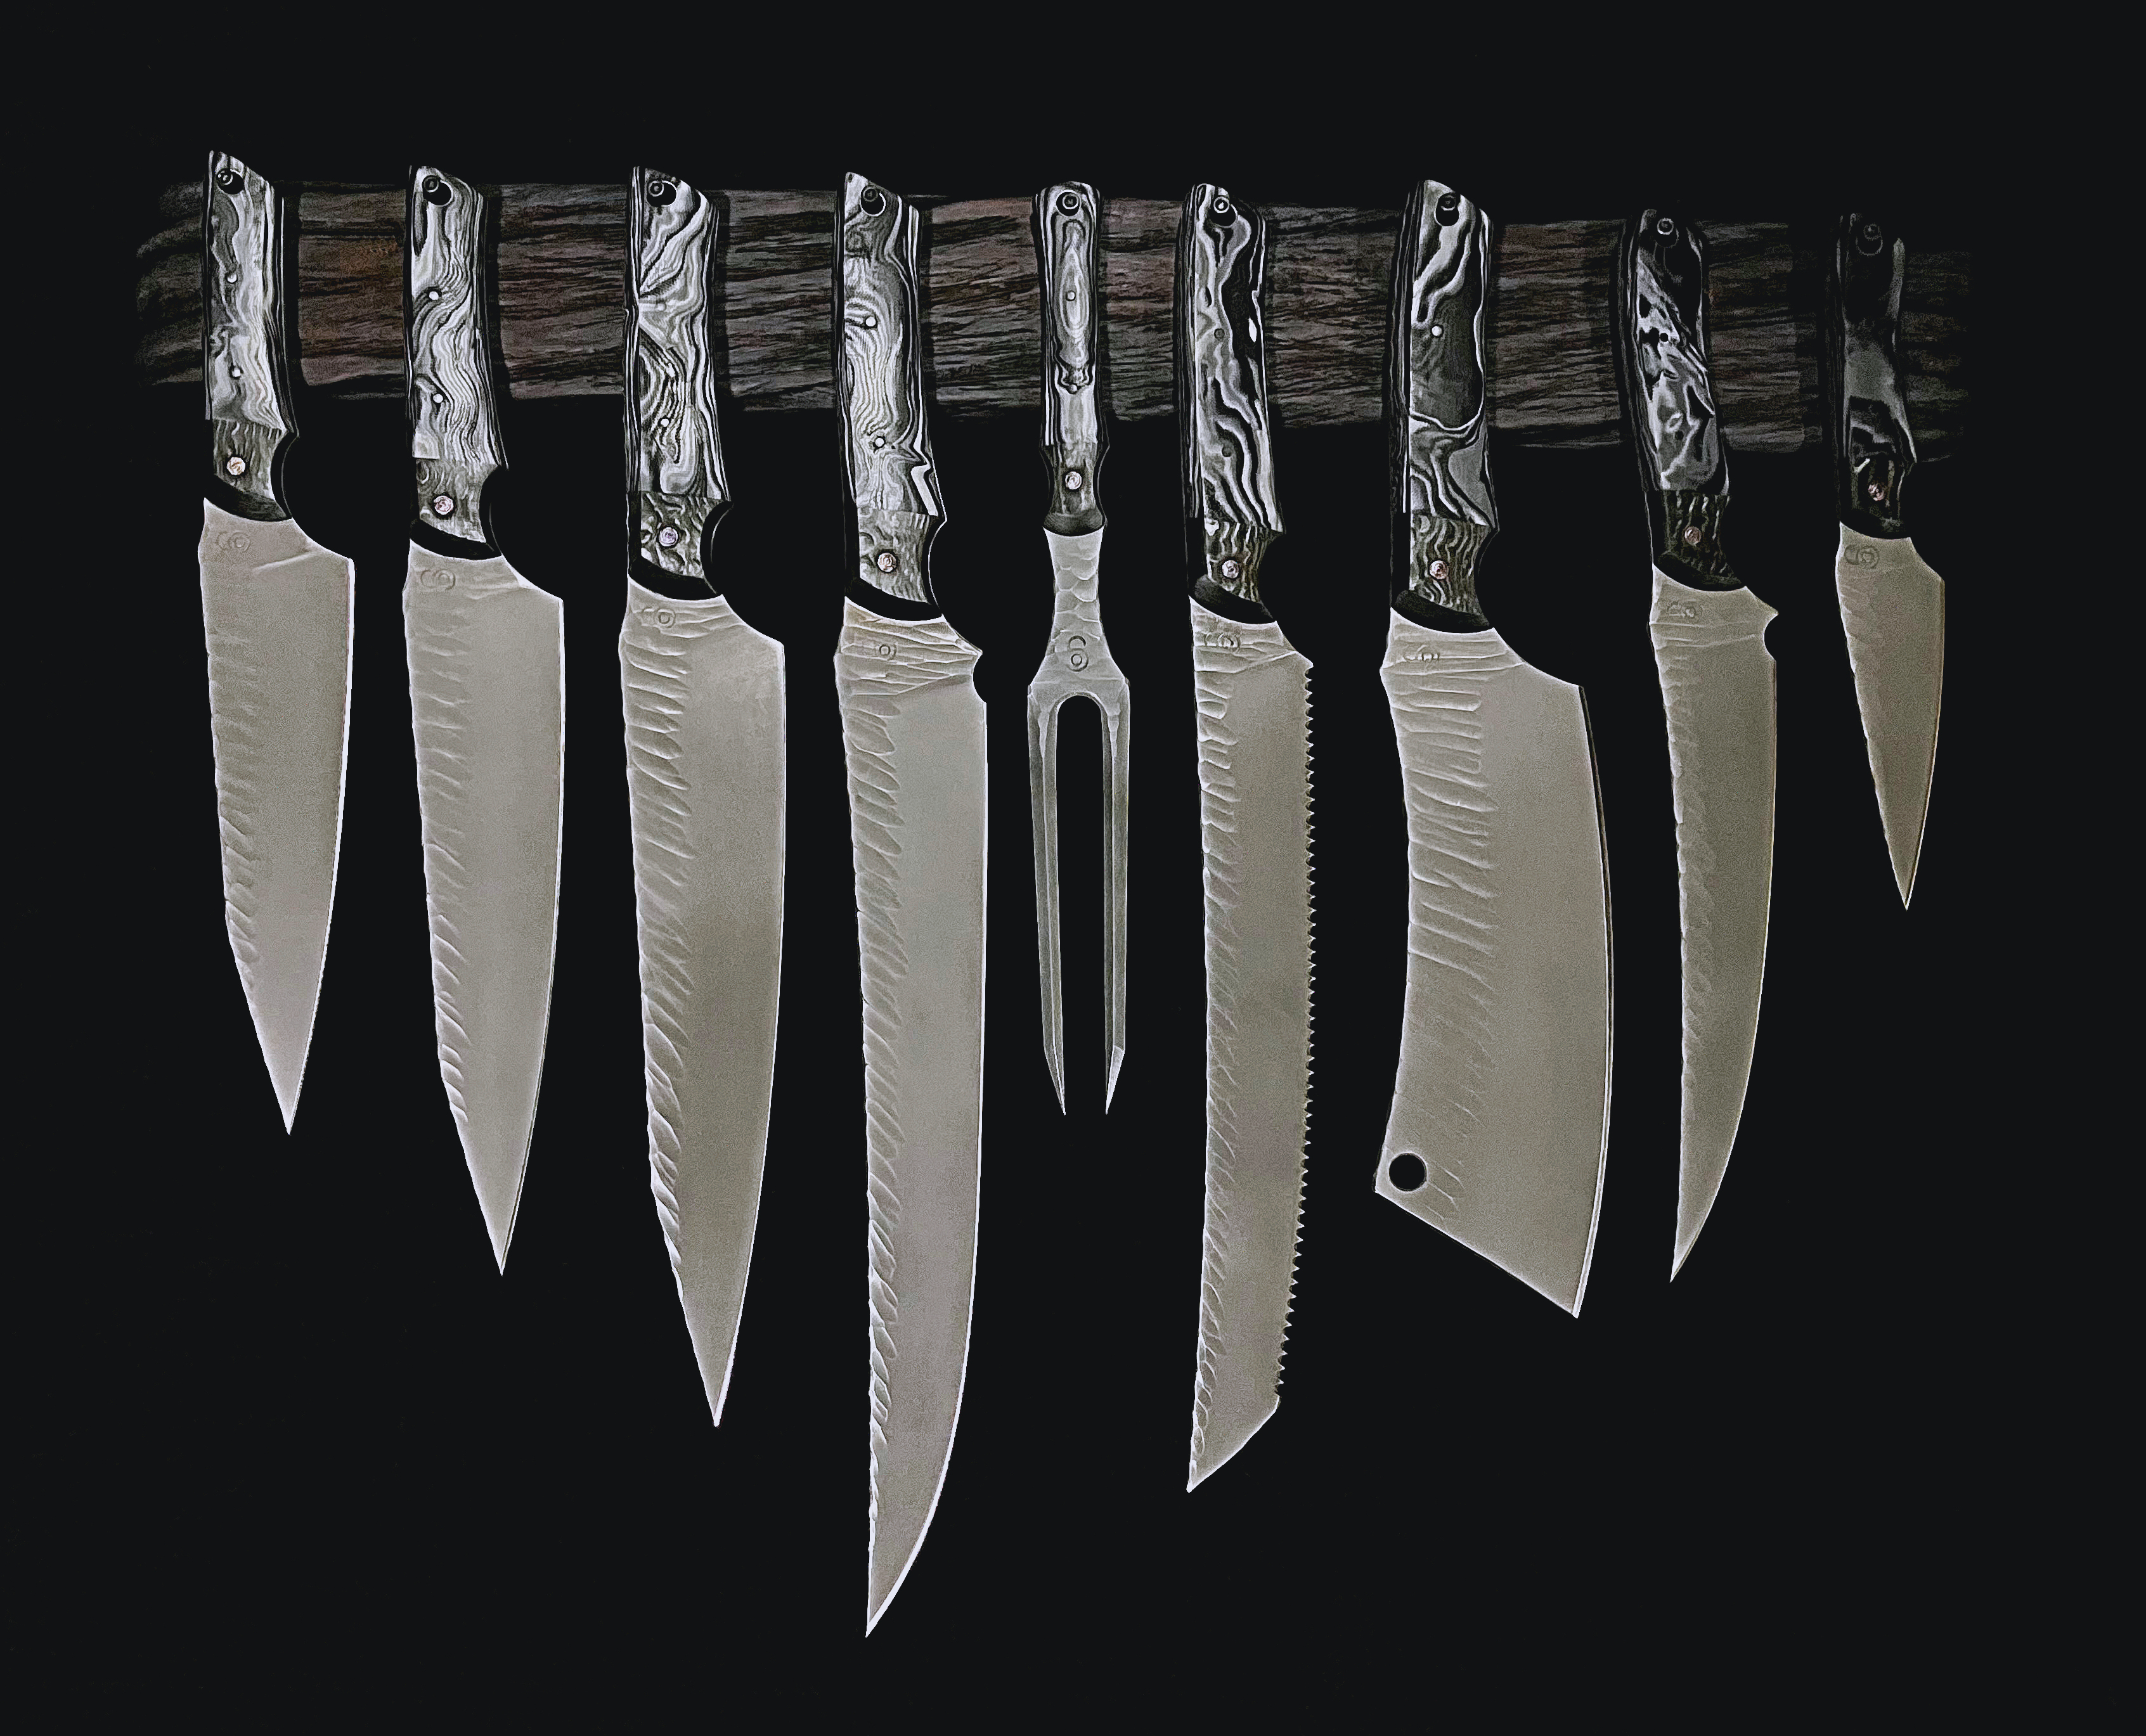 Blade Spring 2012 PDF, PDF, Knife